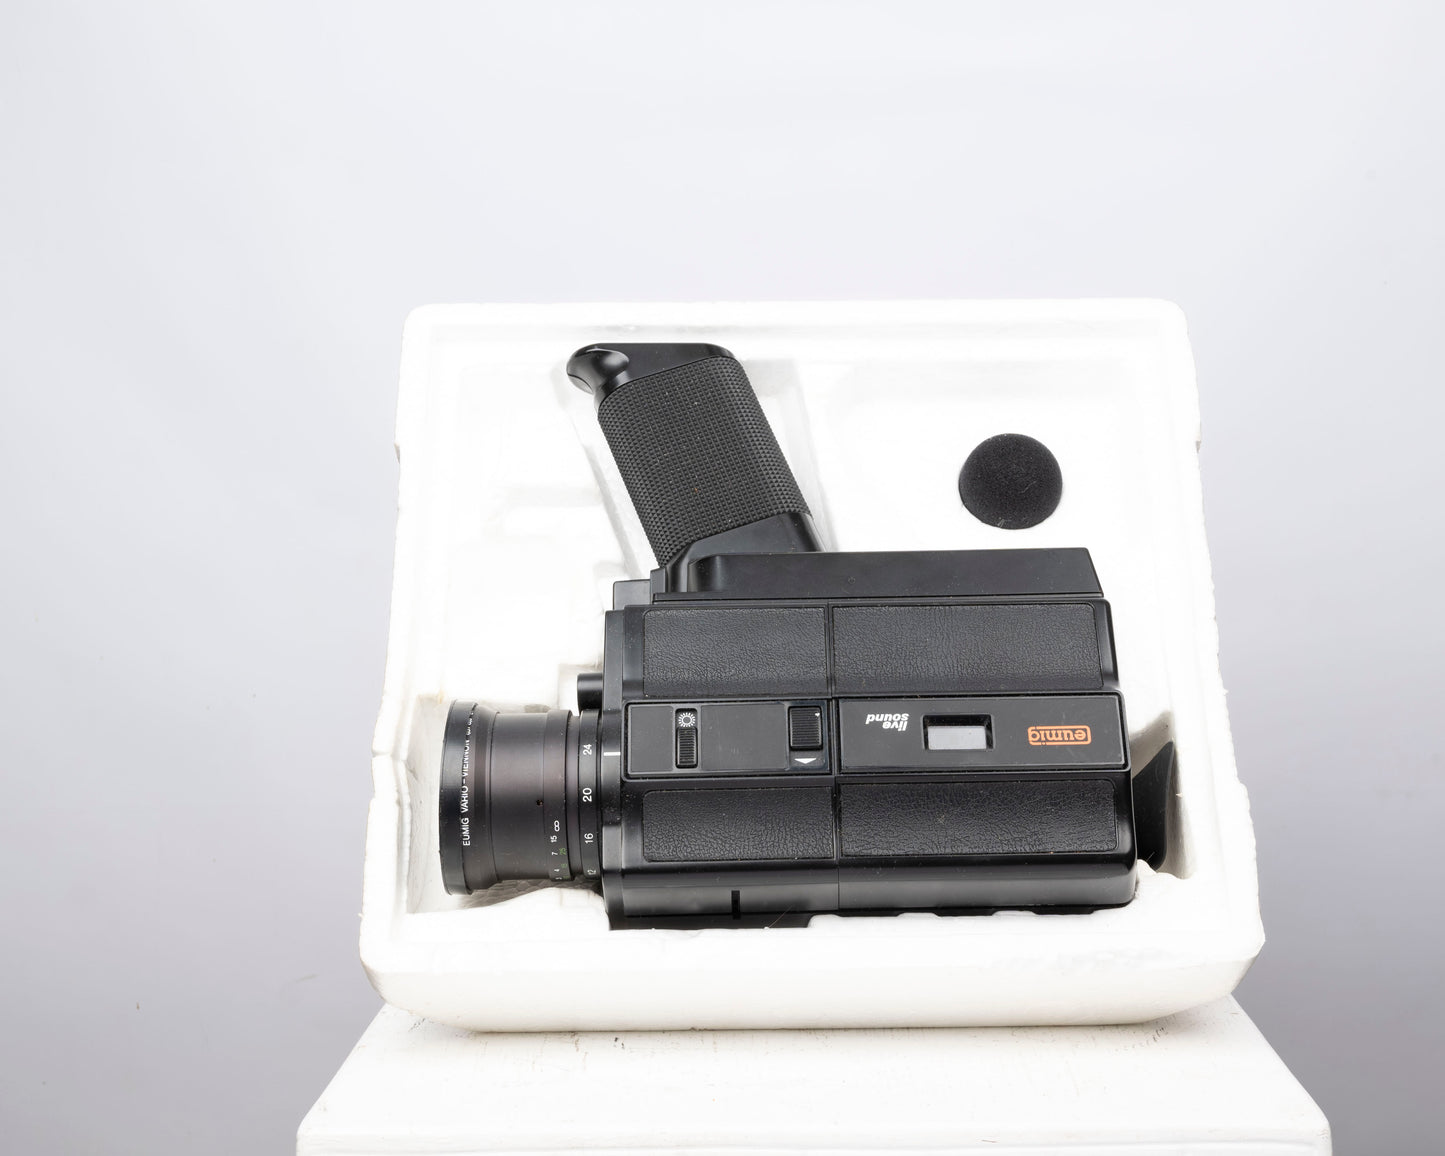 Eumig Sound 30XL Super 8 movie camera w/ original box + accessories